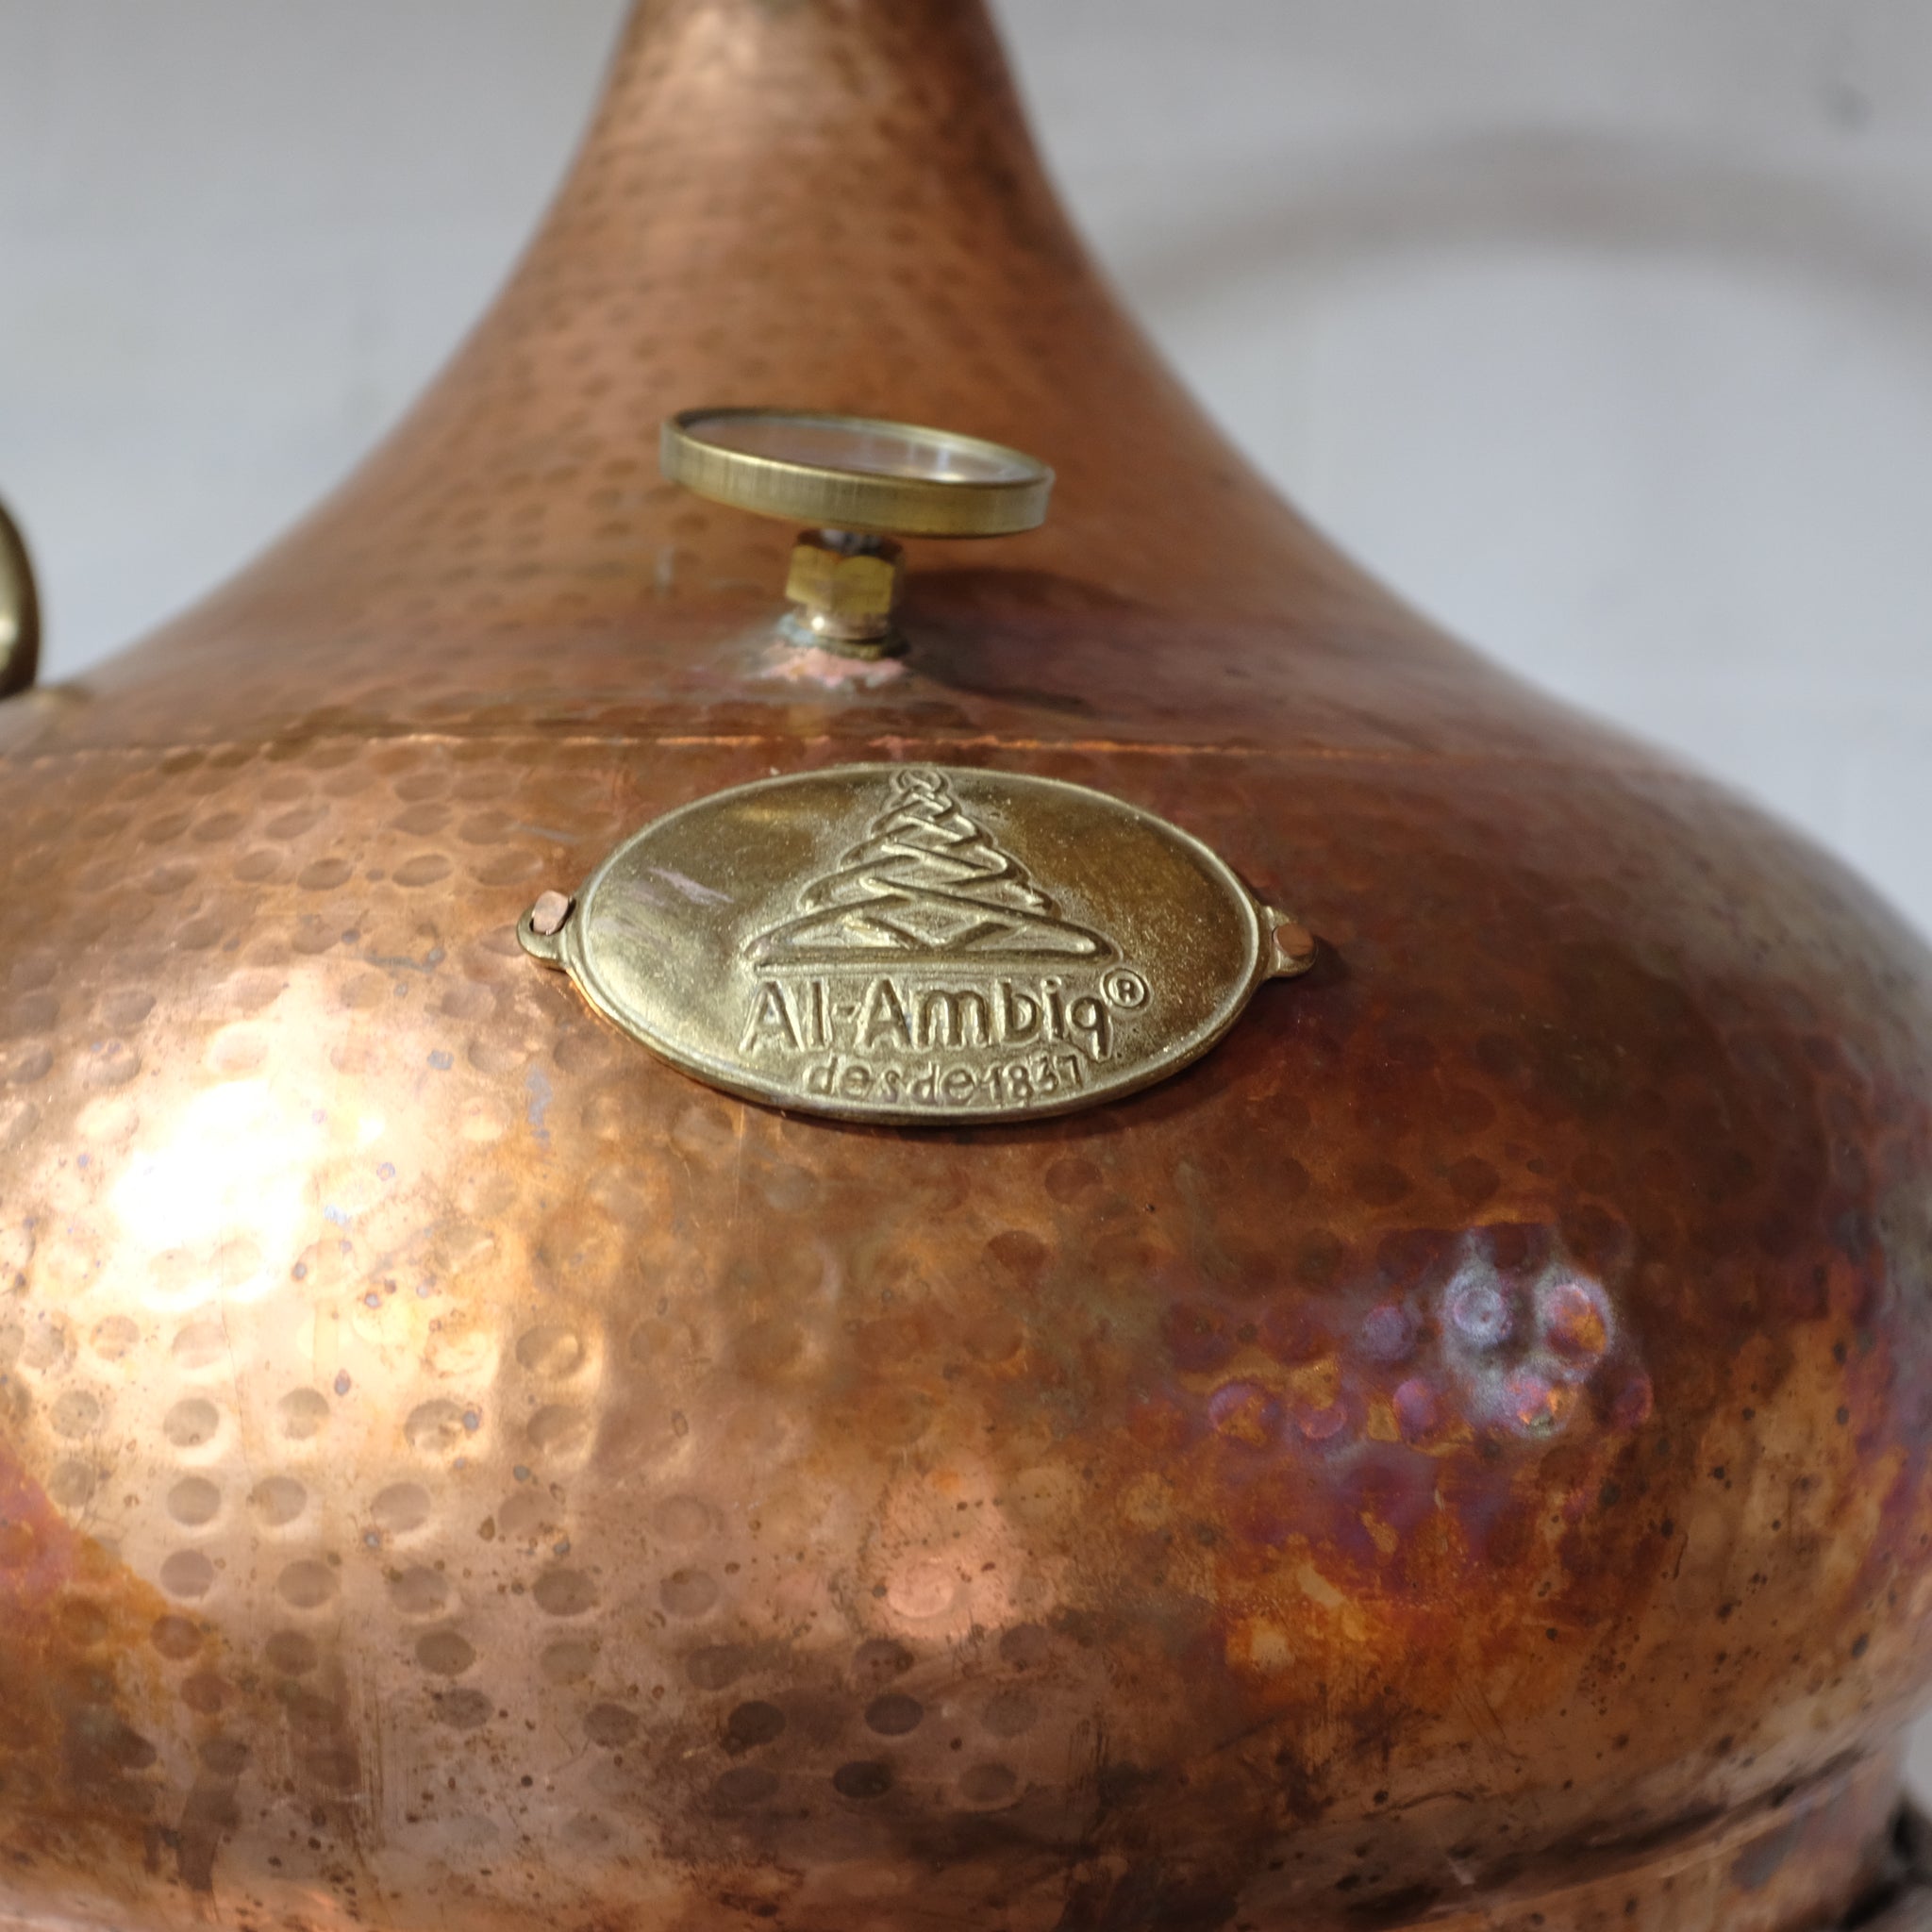 Copper, Still, Eco, Downton Distillery, Distillery, Wiltshire, Explorer's Gin, World Award, Craft Gin